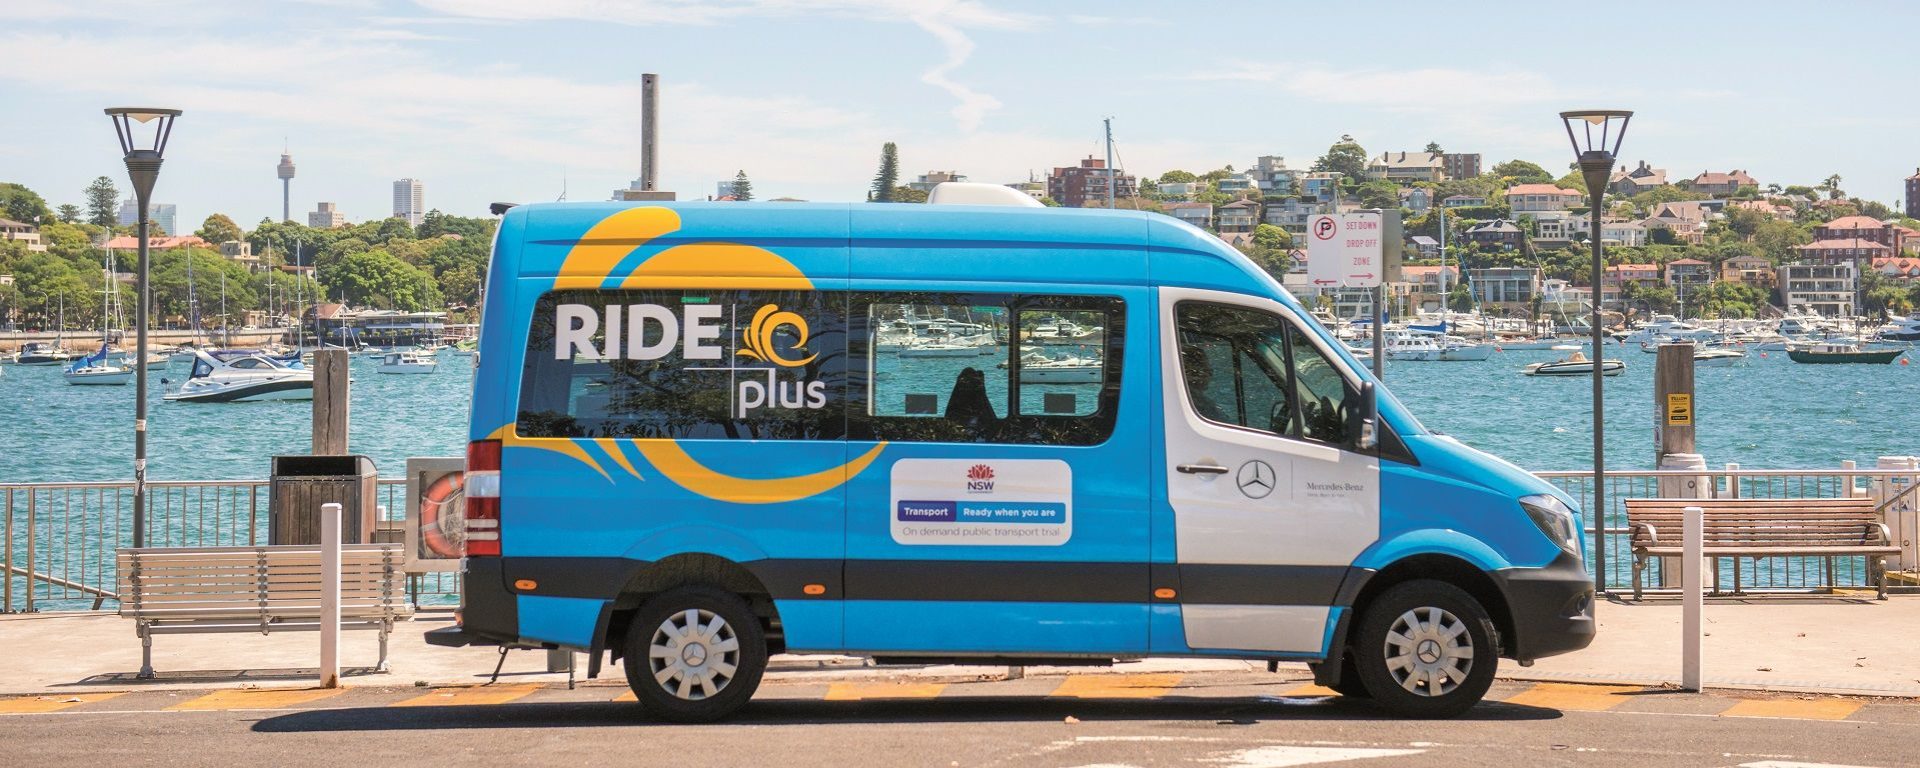 Transdev Australasia Ride plus on demand transportation public transit